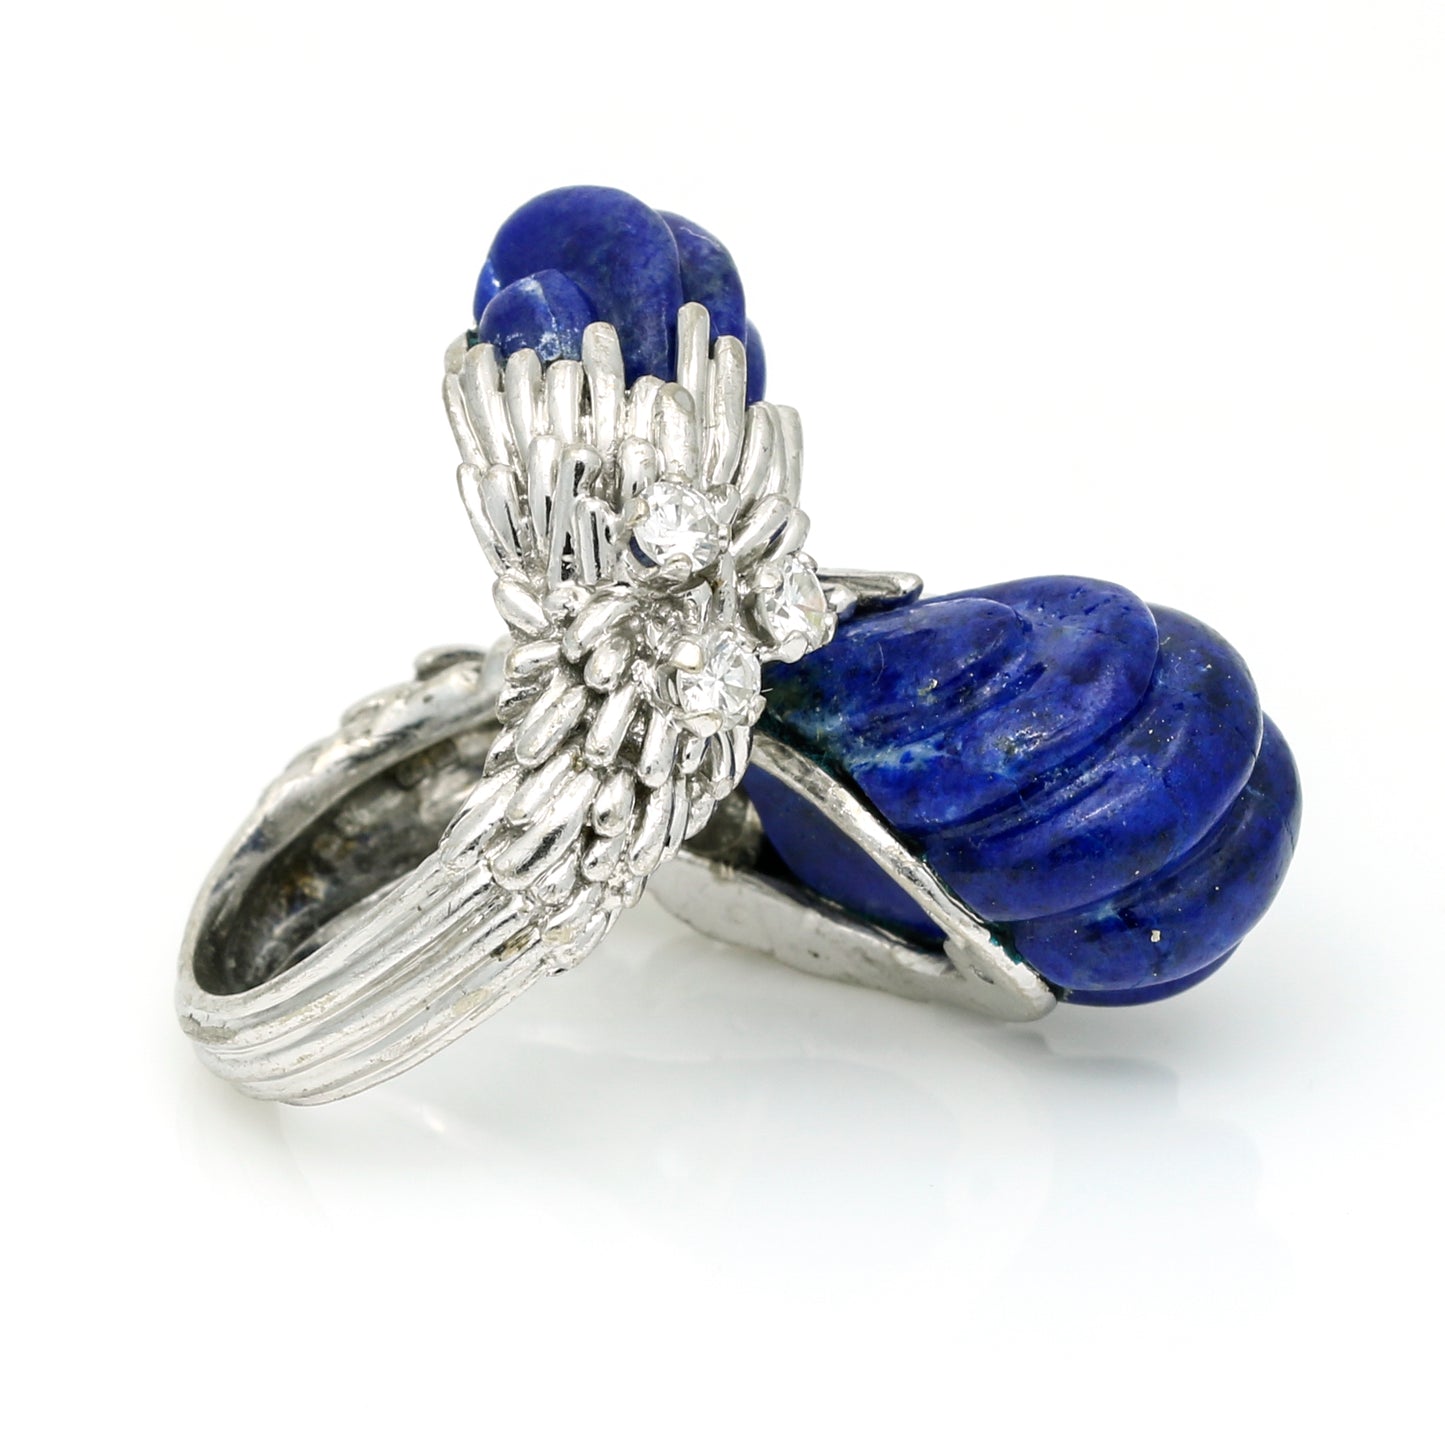 Kutchinsky Carved Lapis Lazuli Diamond Bypass Statement Ring 18k White Gold